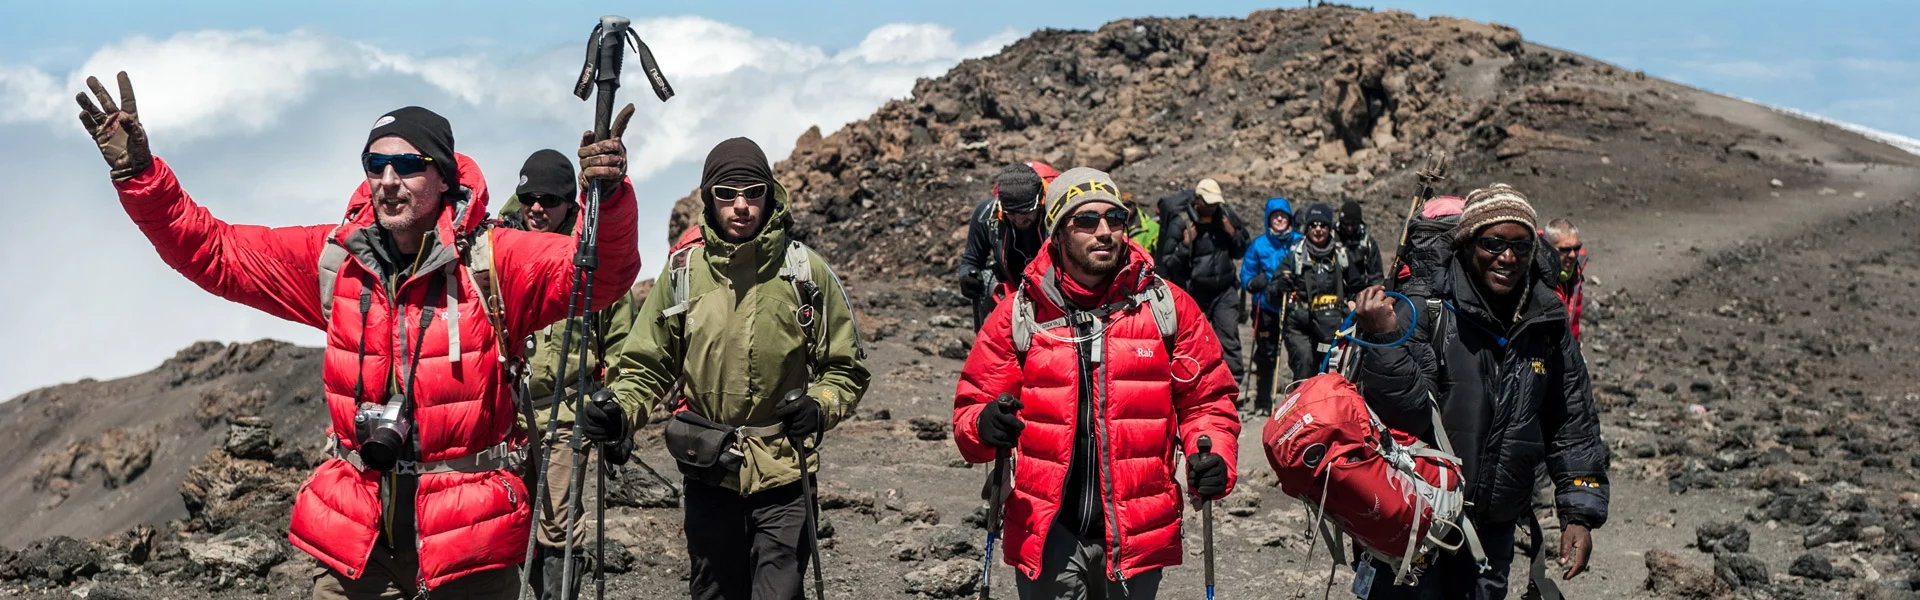 Charity Climbs, Mount Kilimanjaro